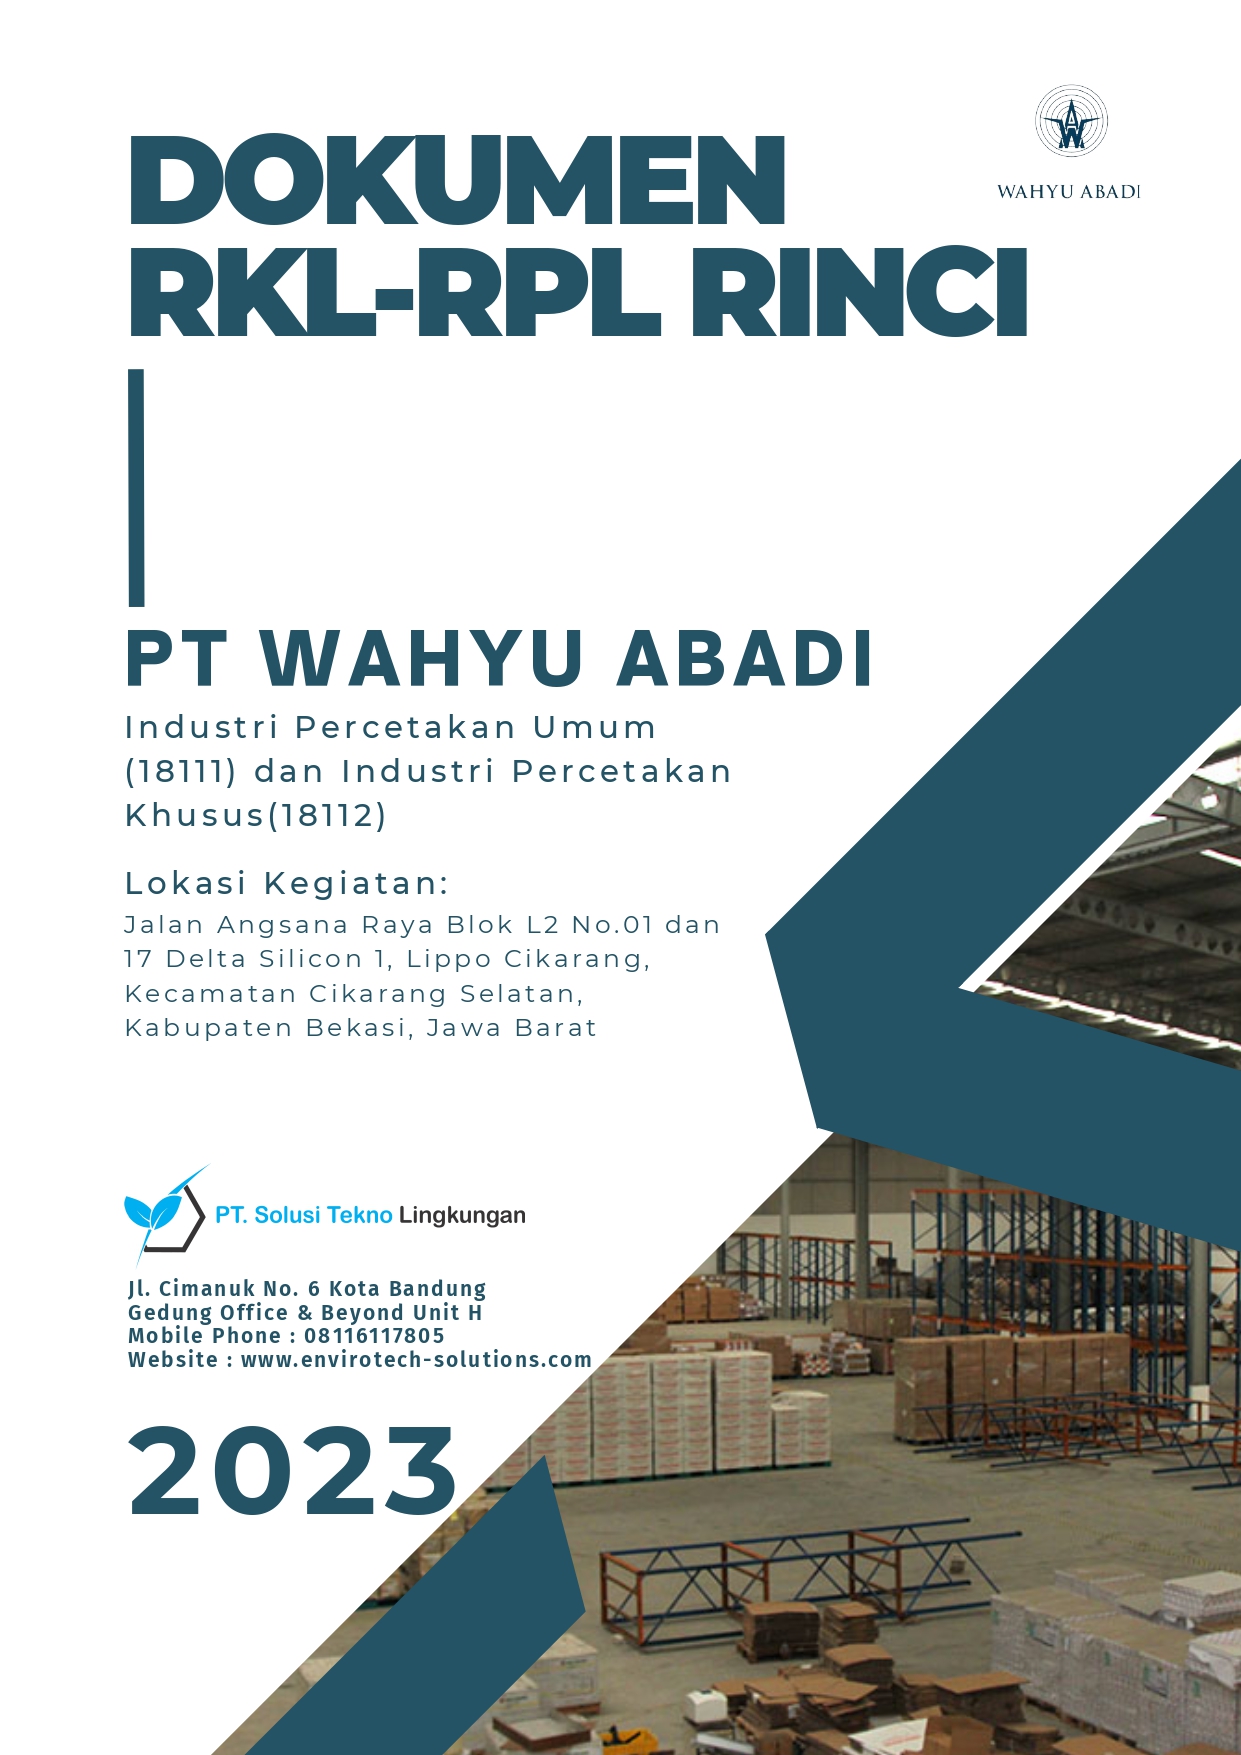 RKL-RPL Rinci PT Wahyu Abadi